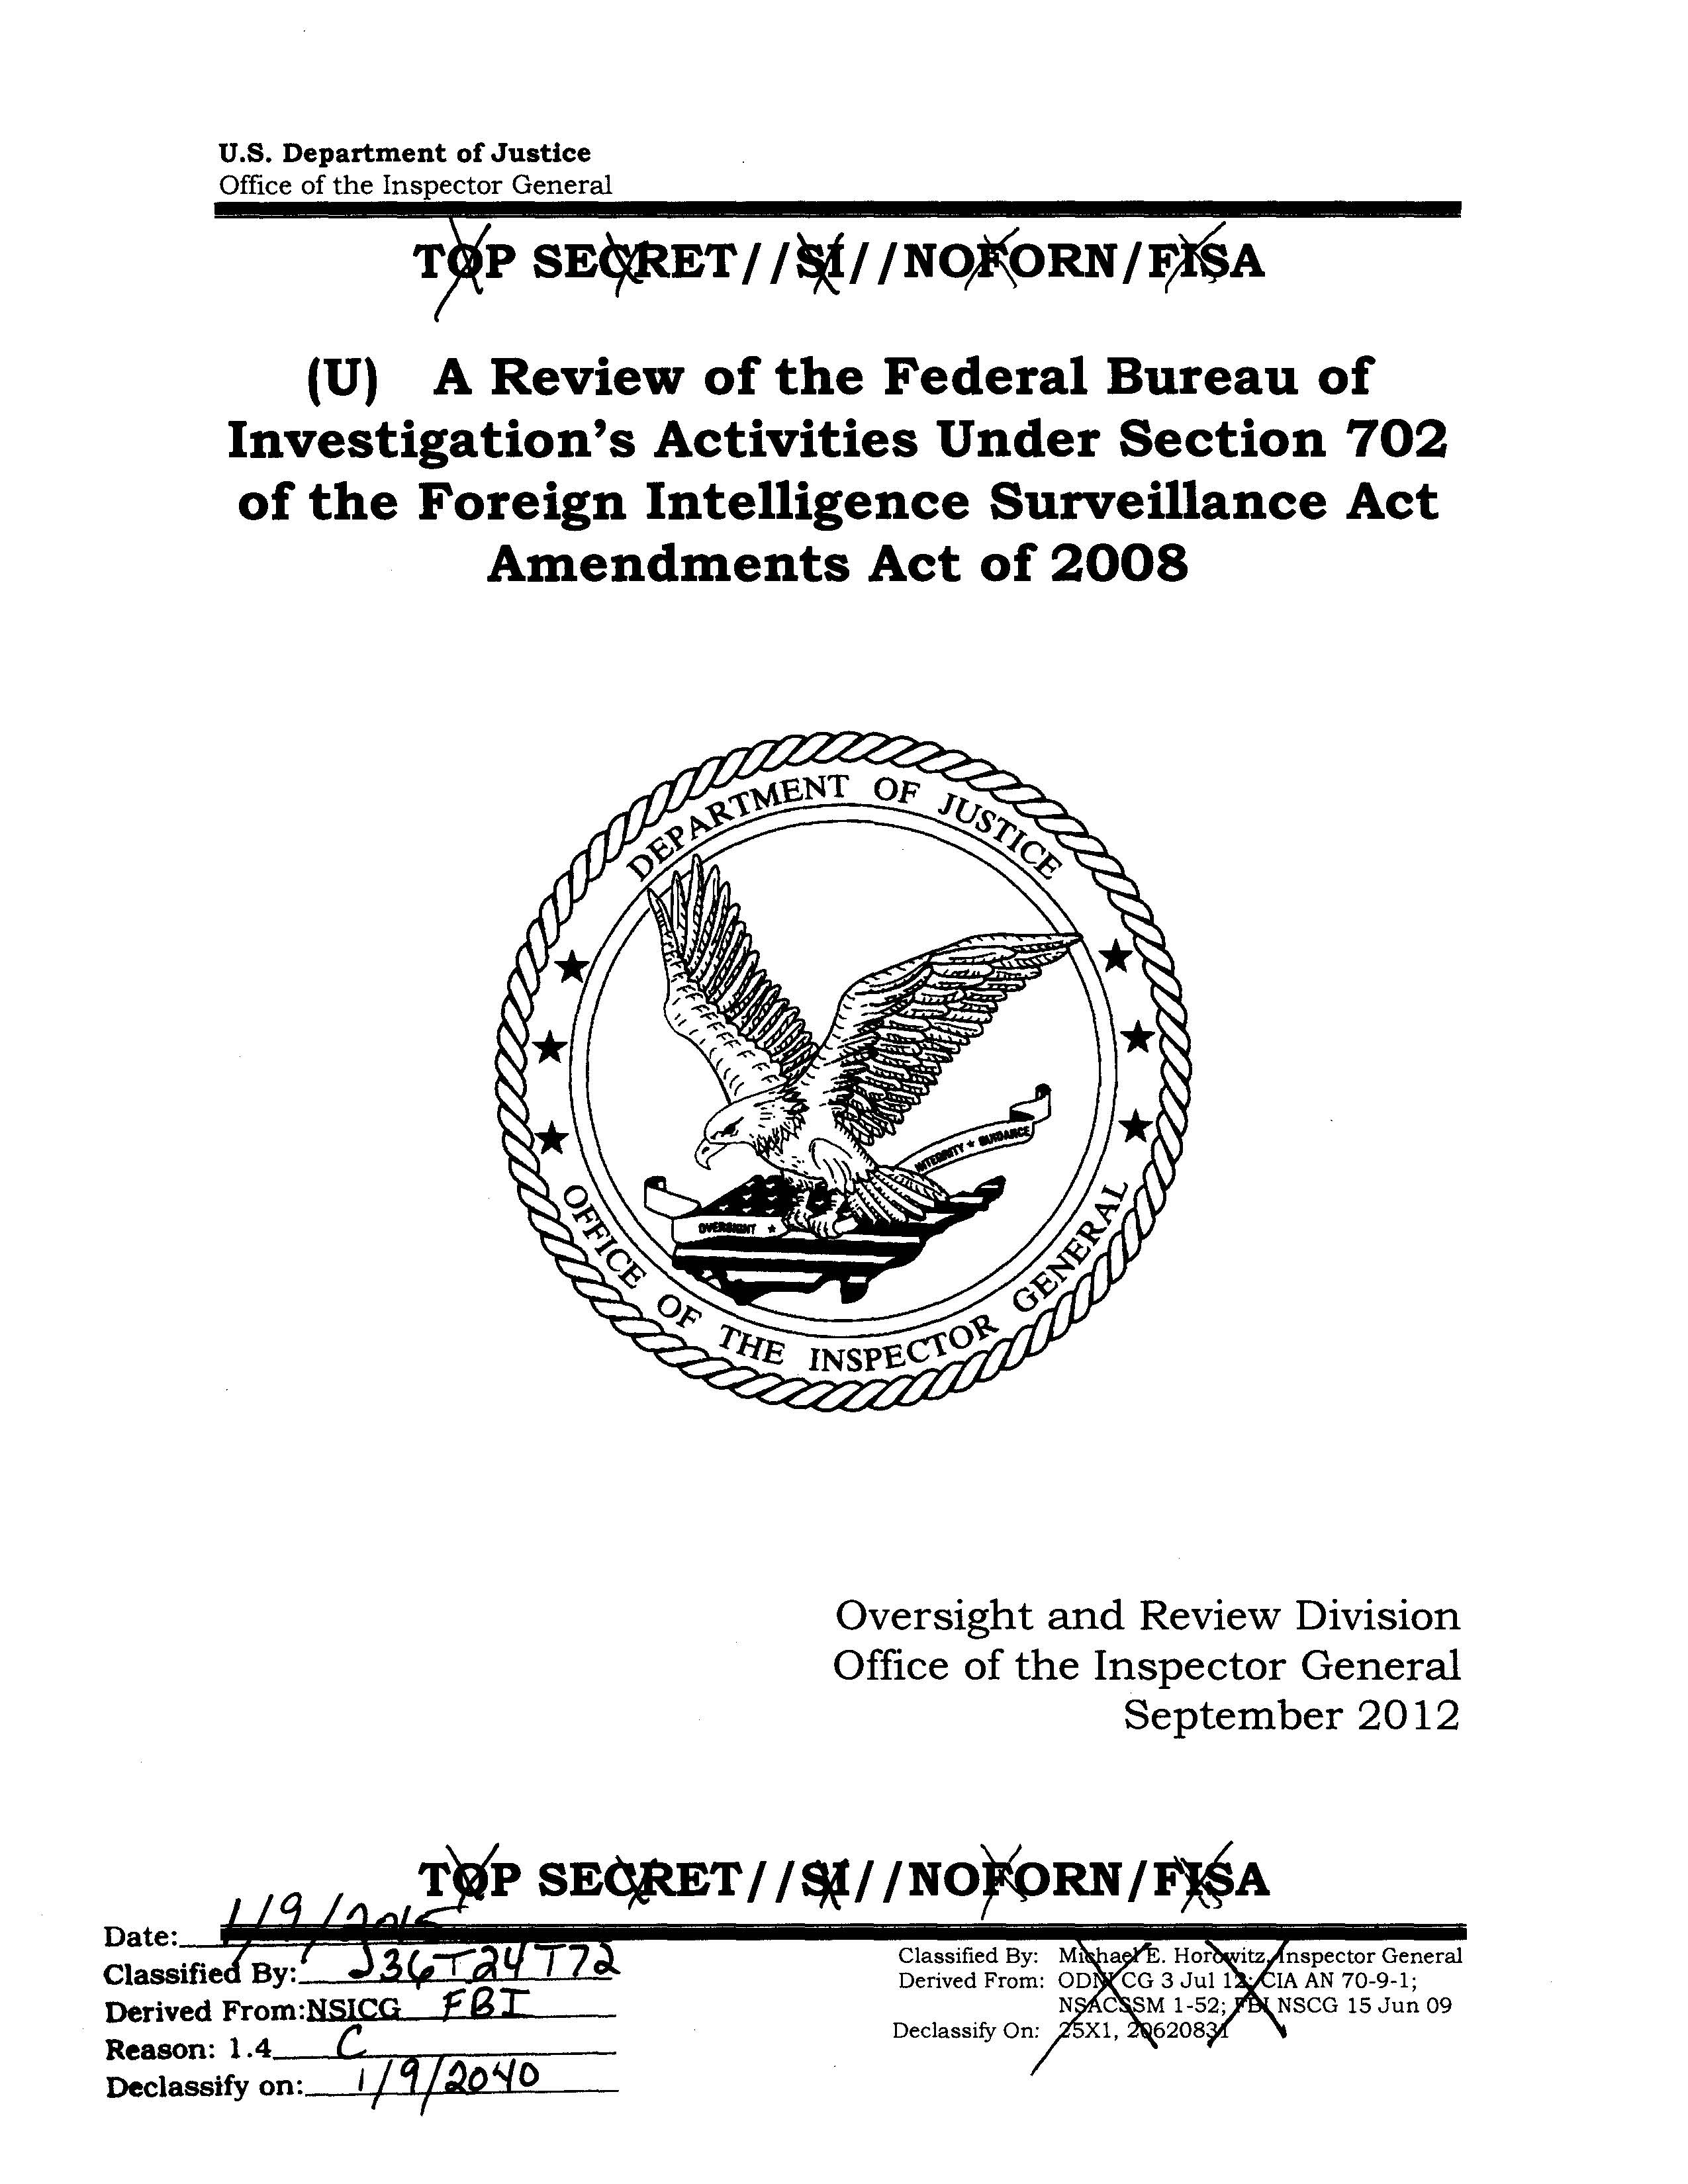 DoJ Inspector General Report on FBI Surveillance Under FISA Section 702